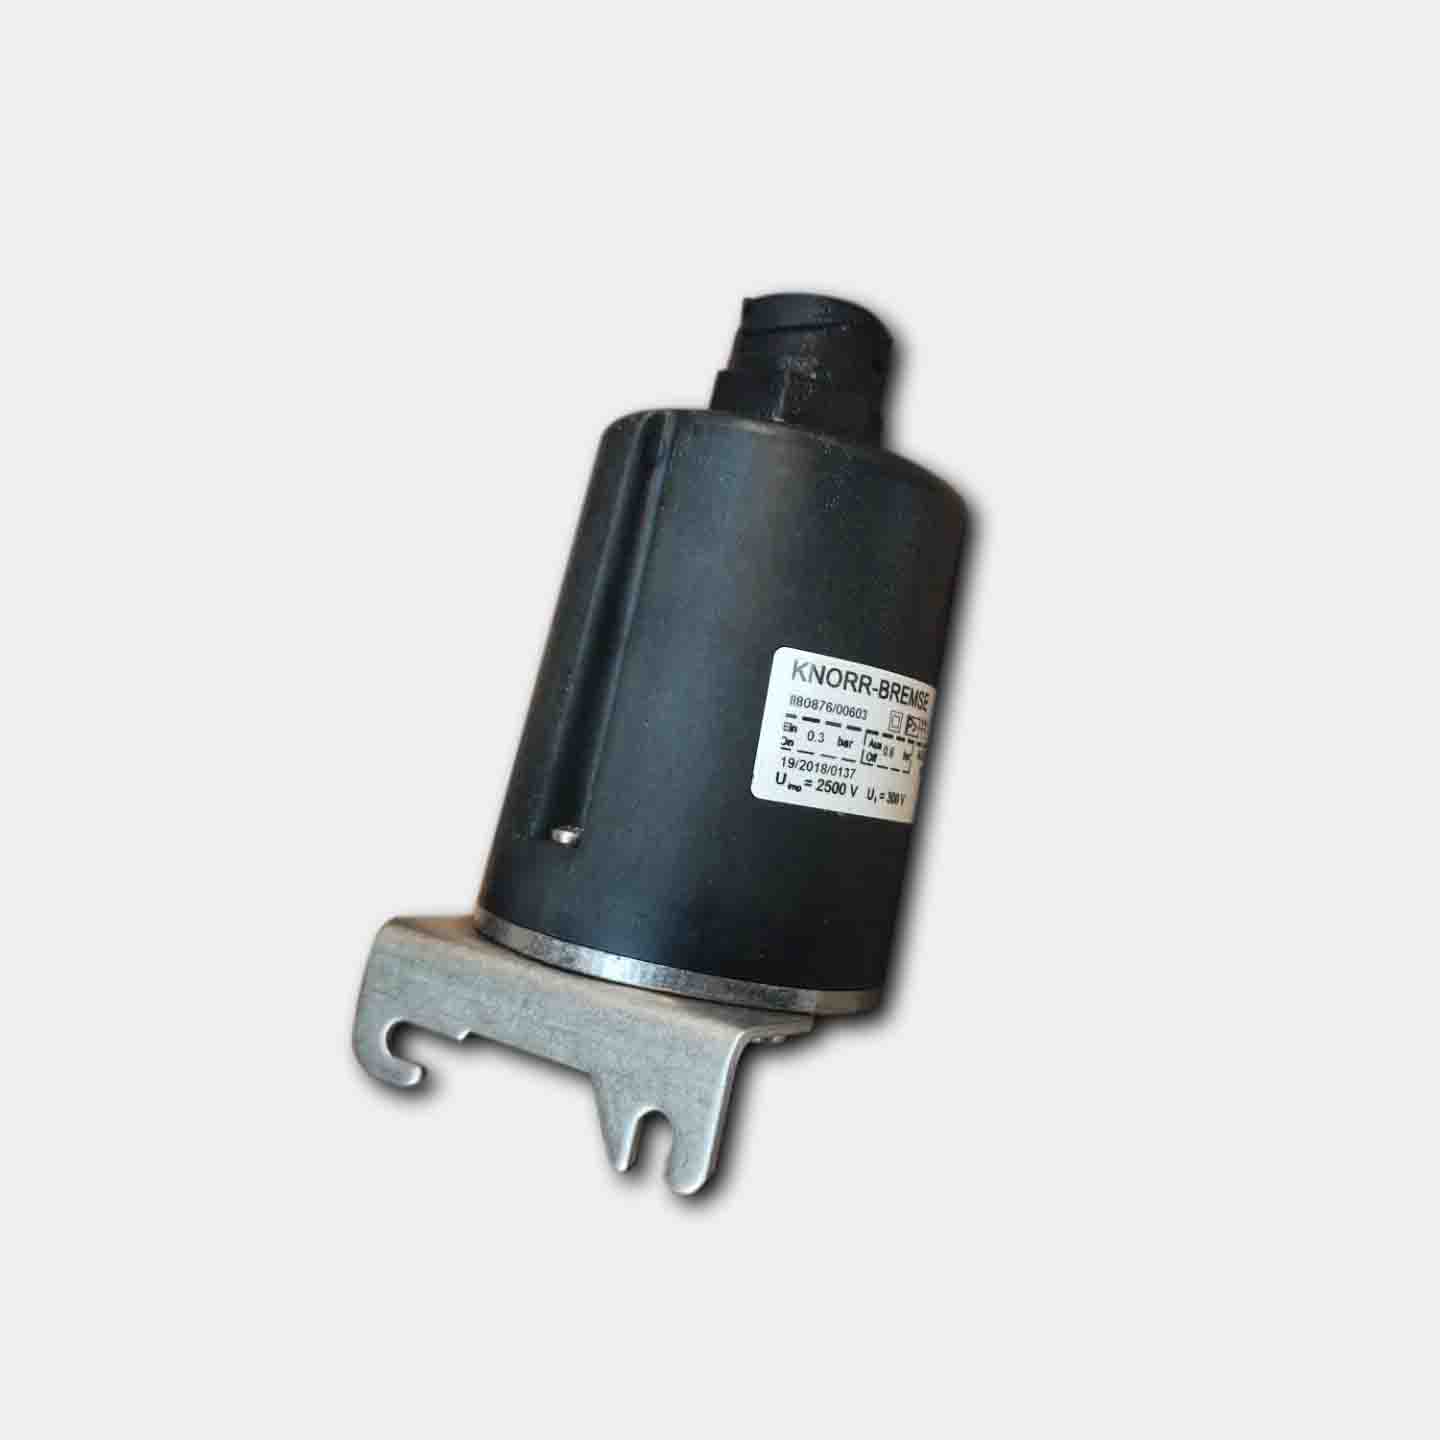 KNORR-BREMSE Pressure Switch II80876 00603 09070 04535 Regulator